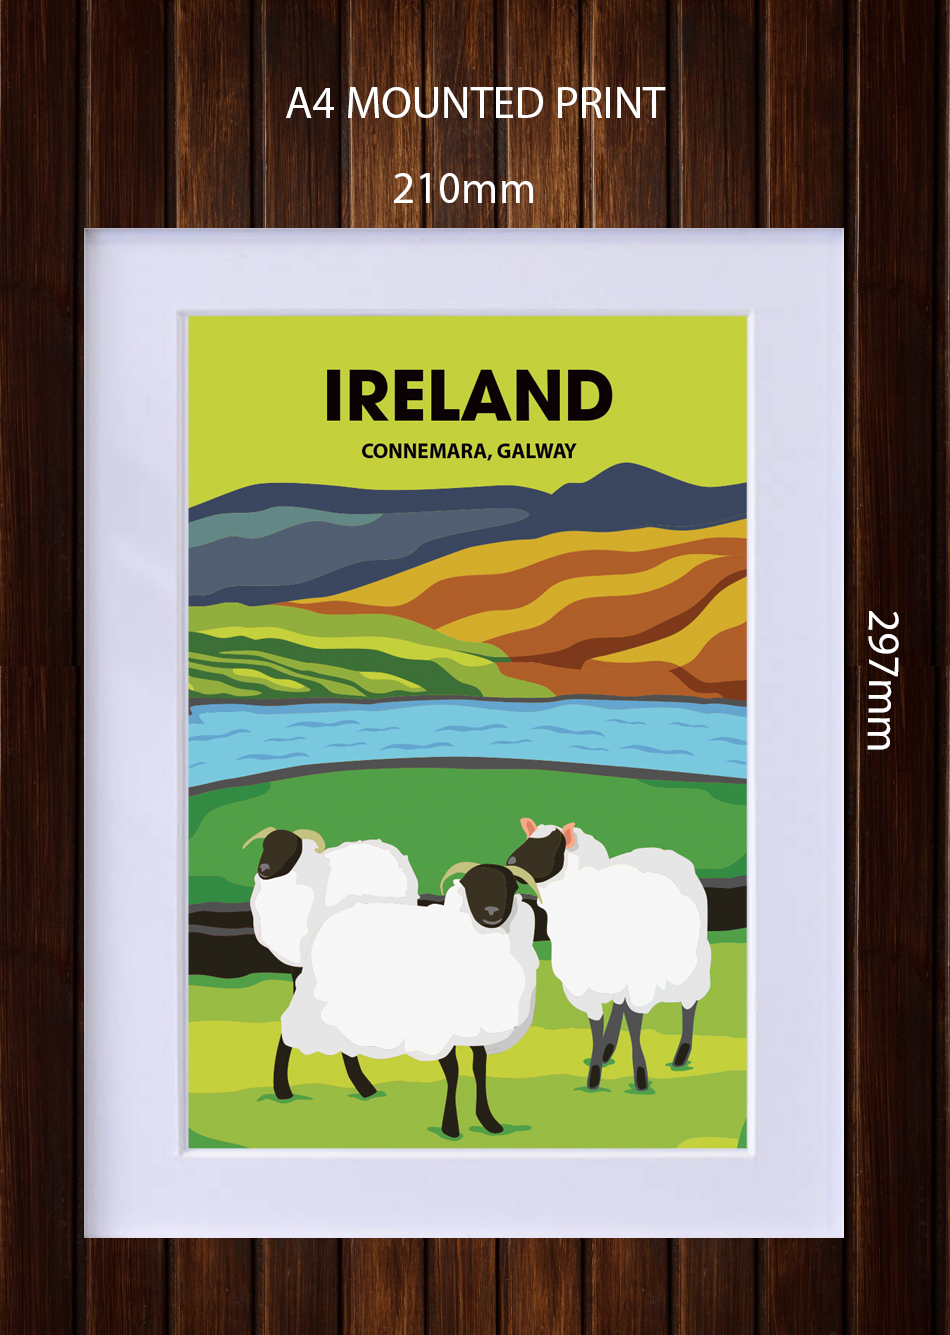 Ireland Postcard or A4 Mounted Print - Connemara, Galway